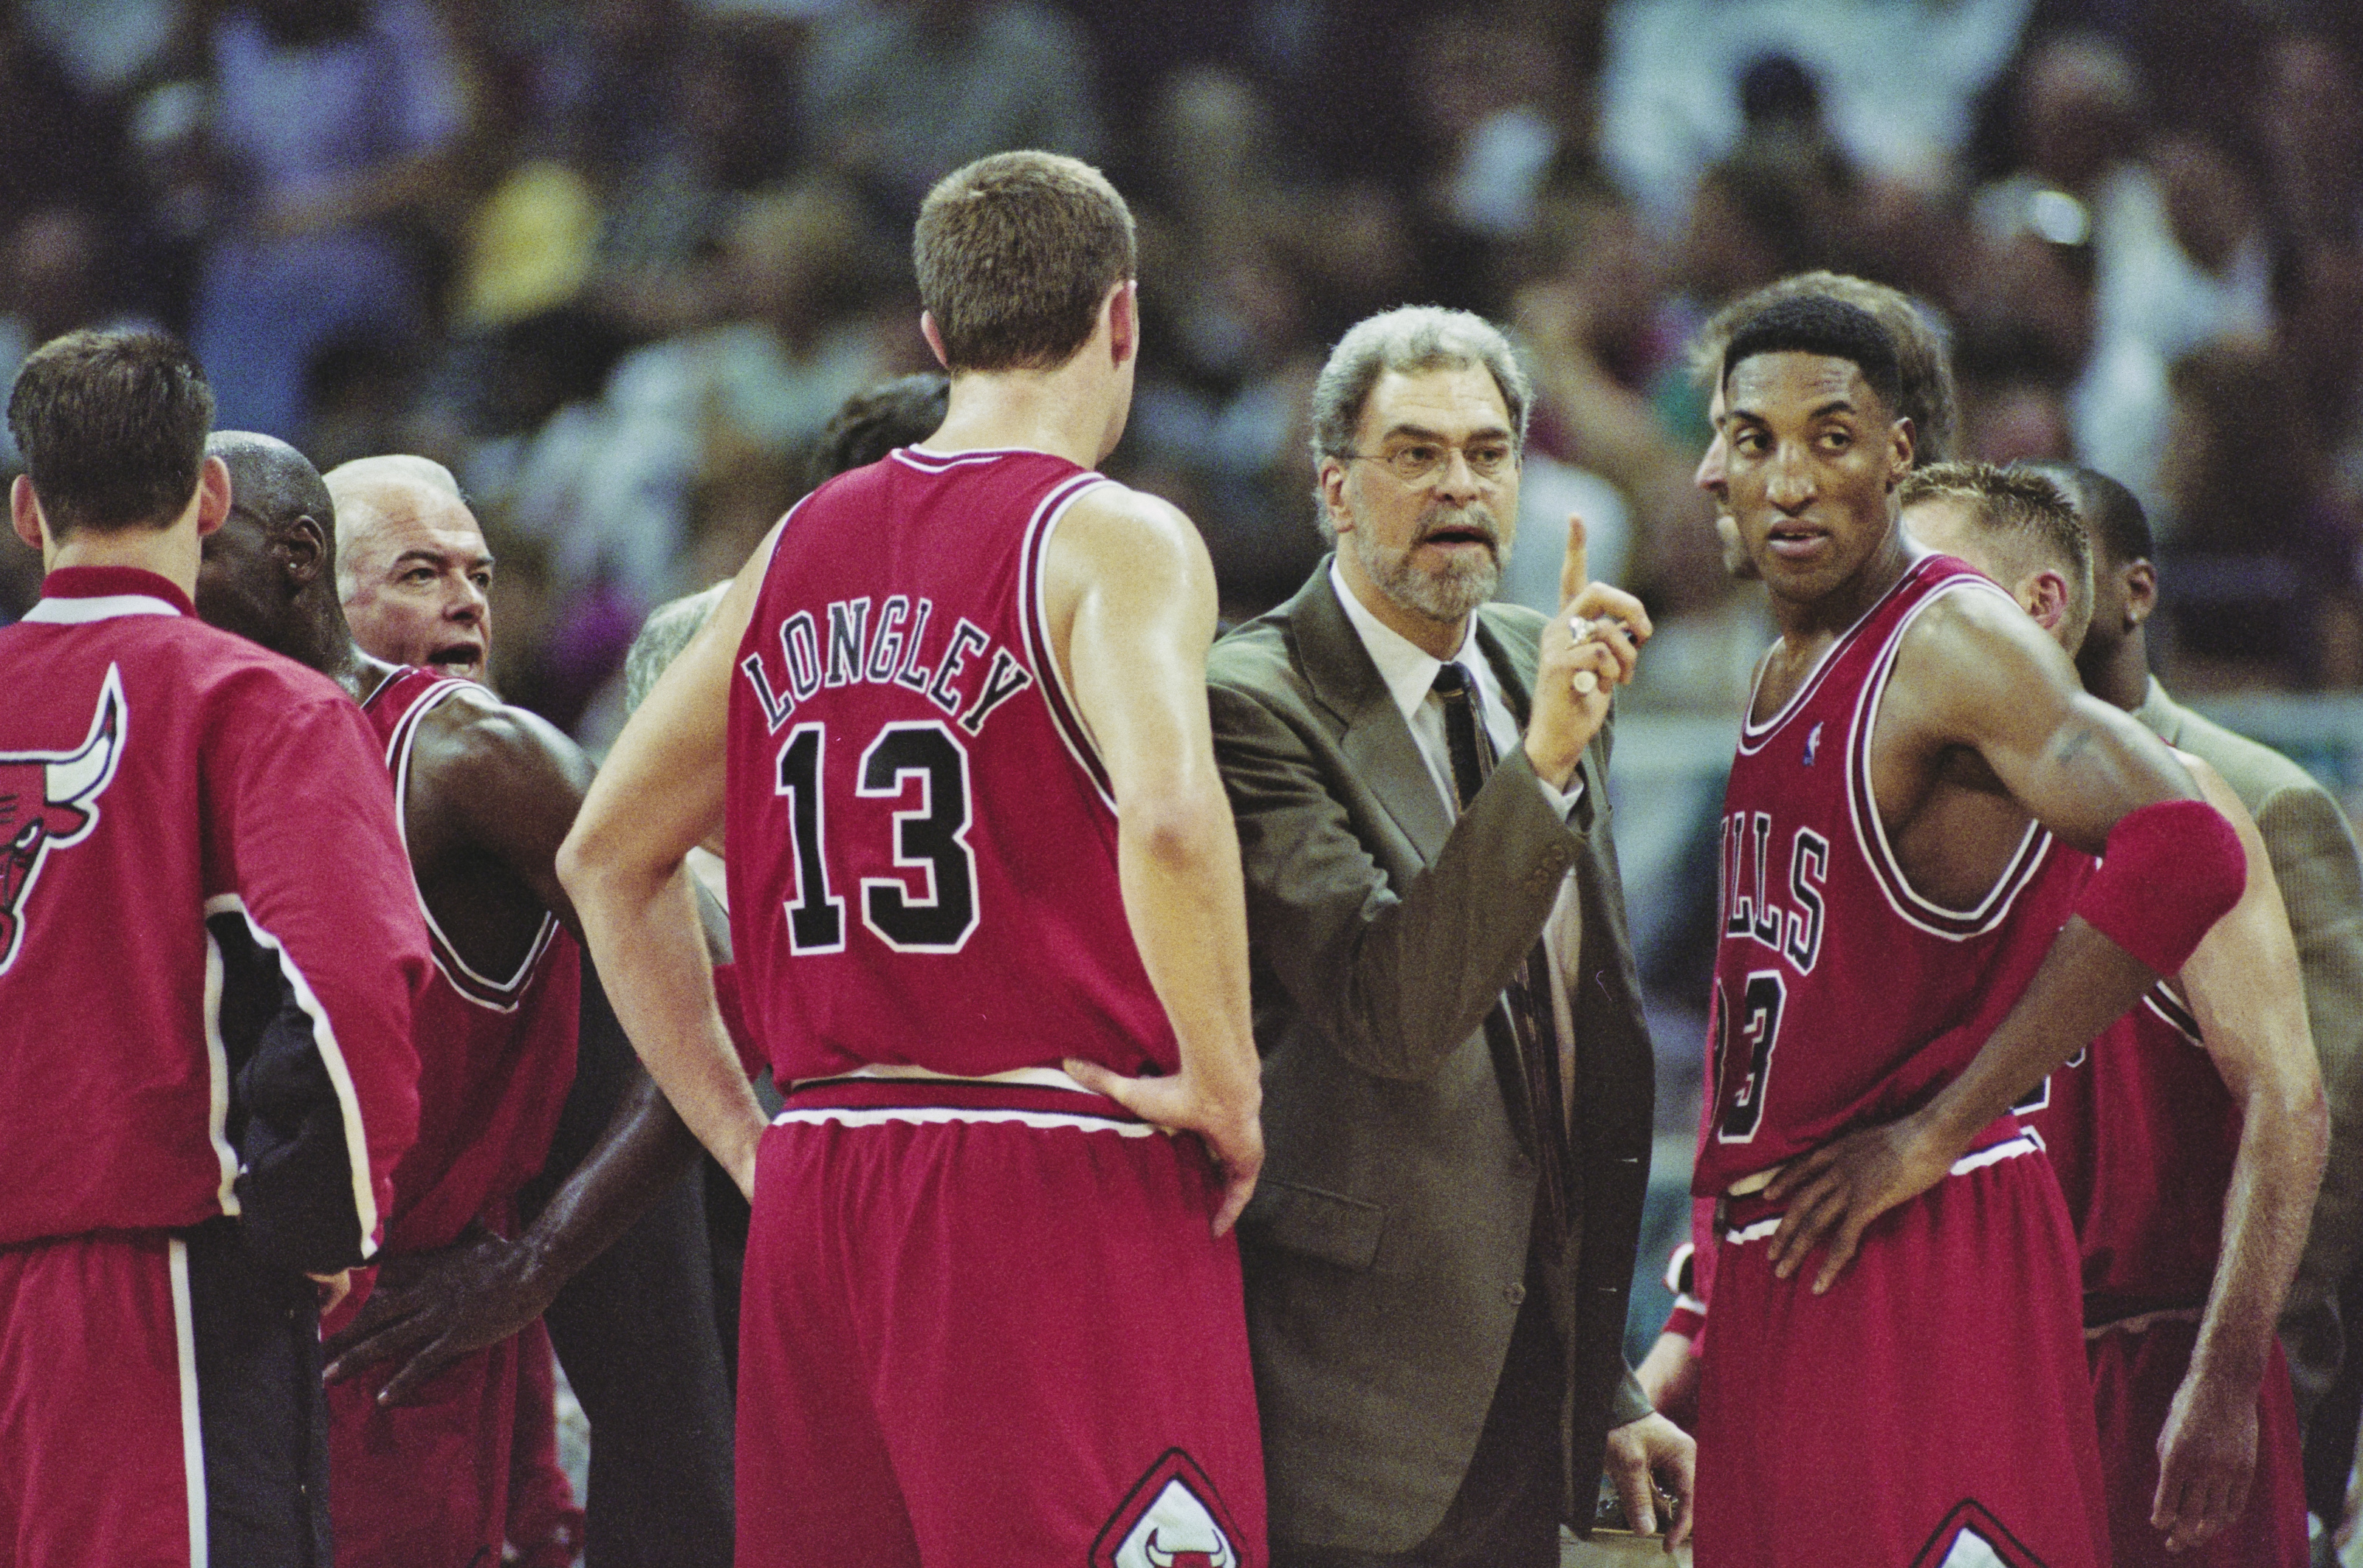 Chicago Bulls 1990s dynasty: Michael Jordan and Scottie Pippen's